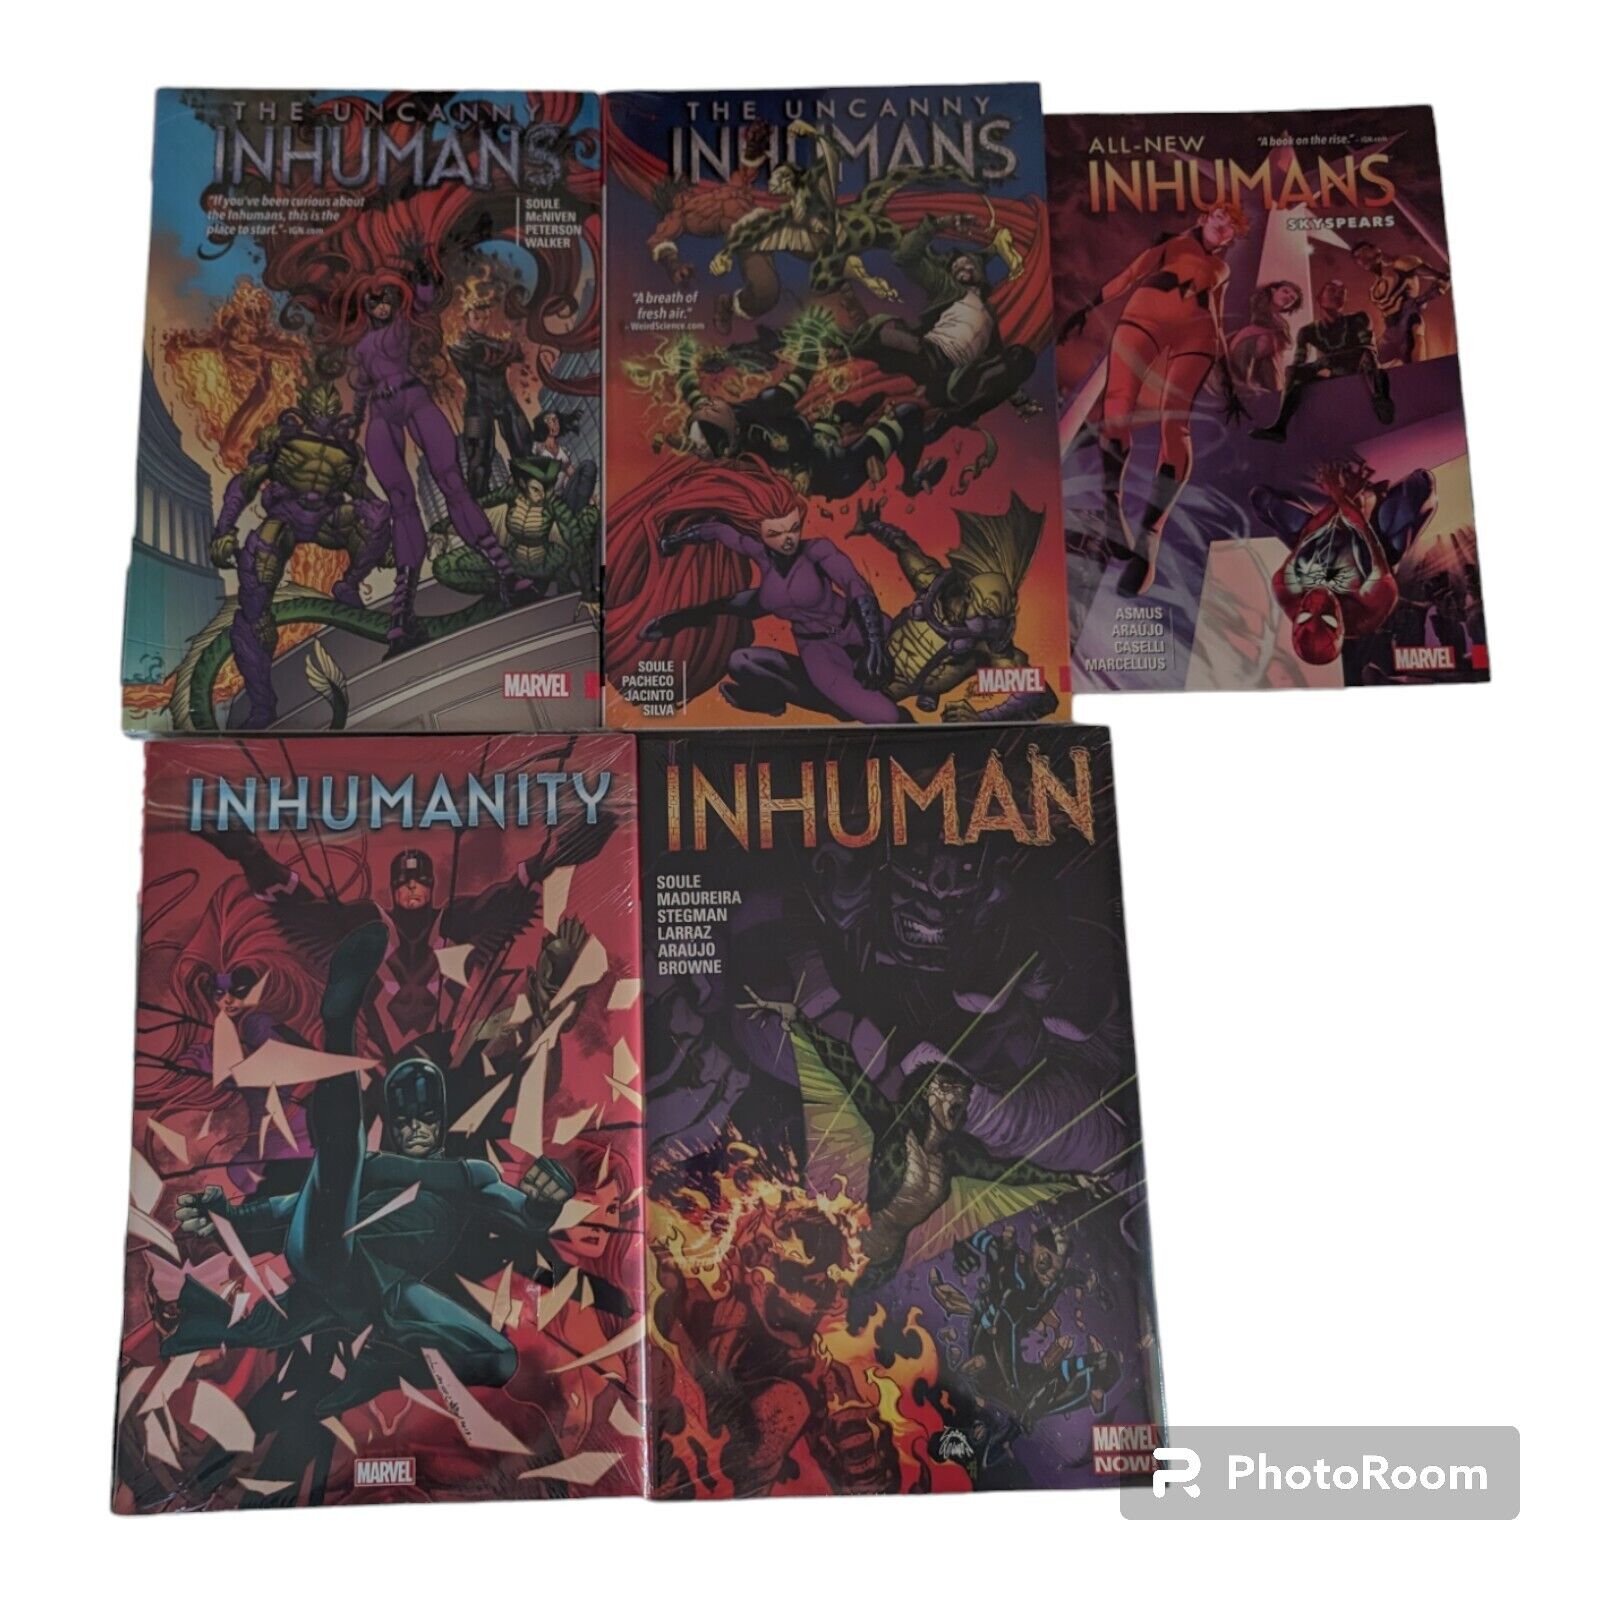 Uncanny Inhumans Vol. 1 & 2 Inhumanity Inhuman Hardcover OHC All New Vol. 2 TPB